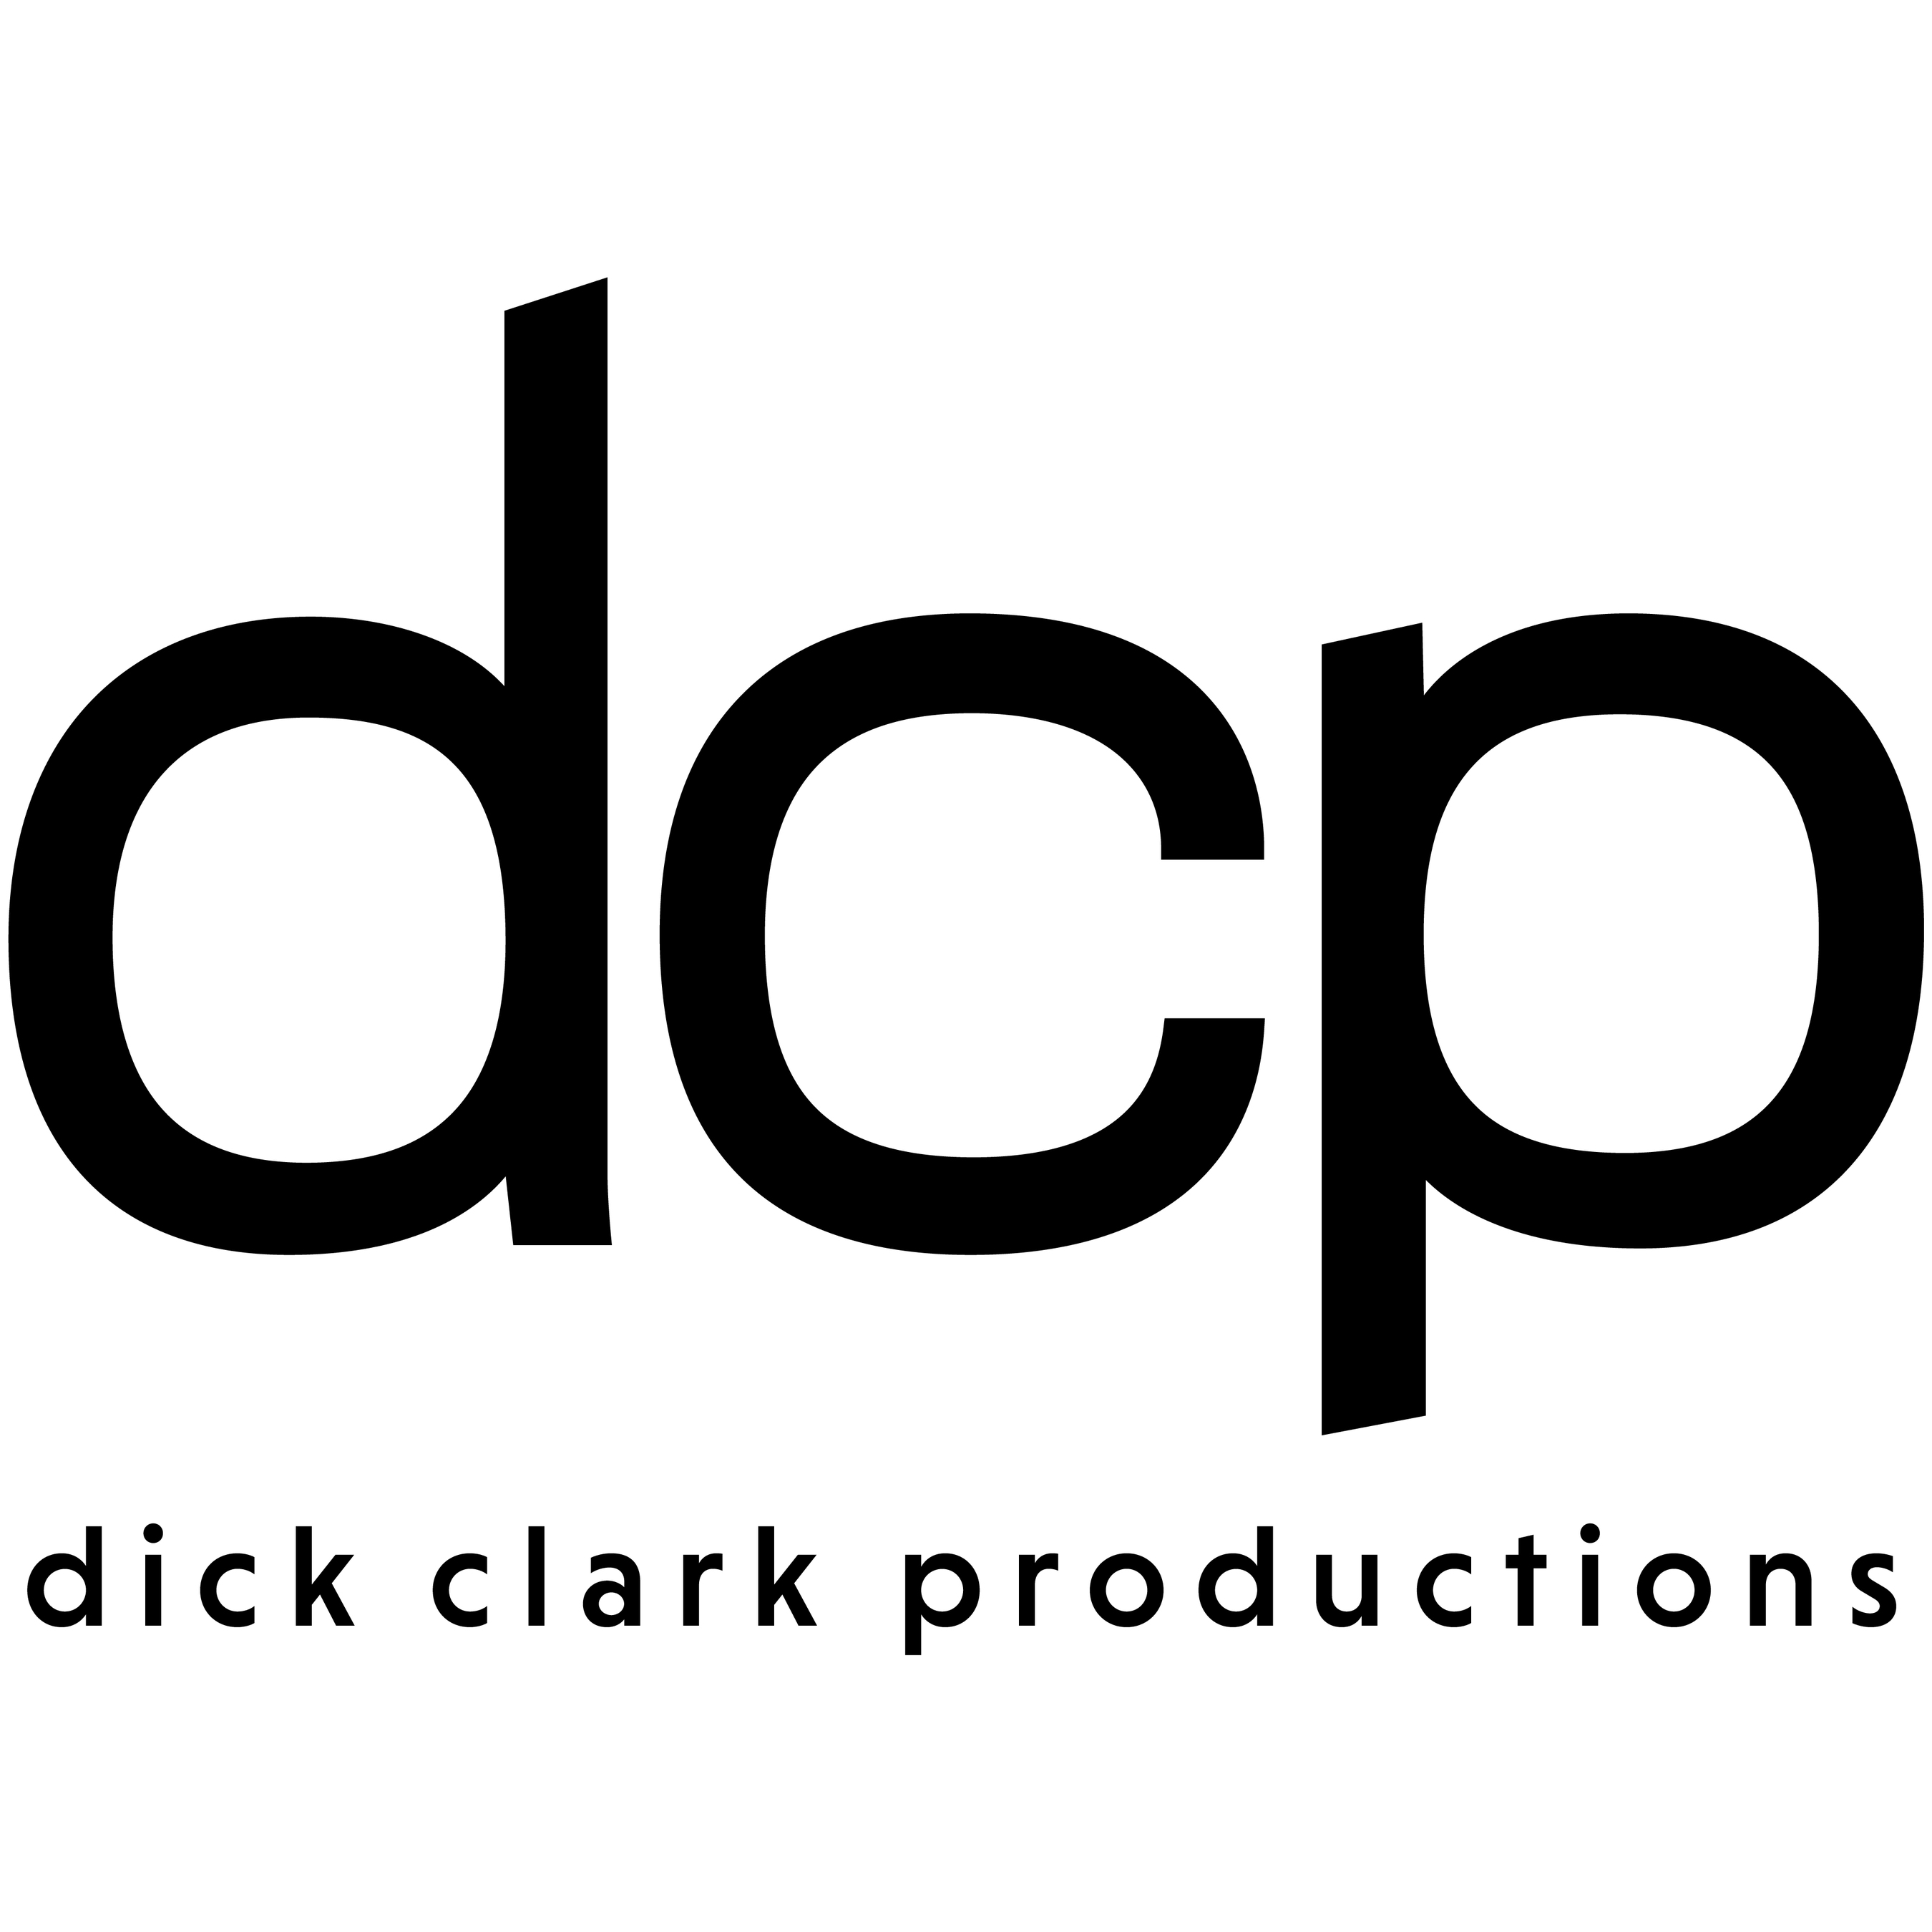 Dick clark productions list